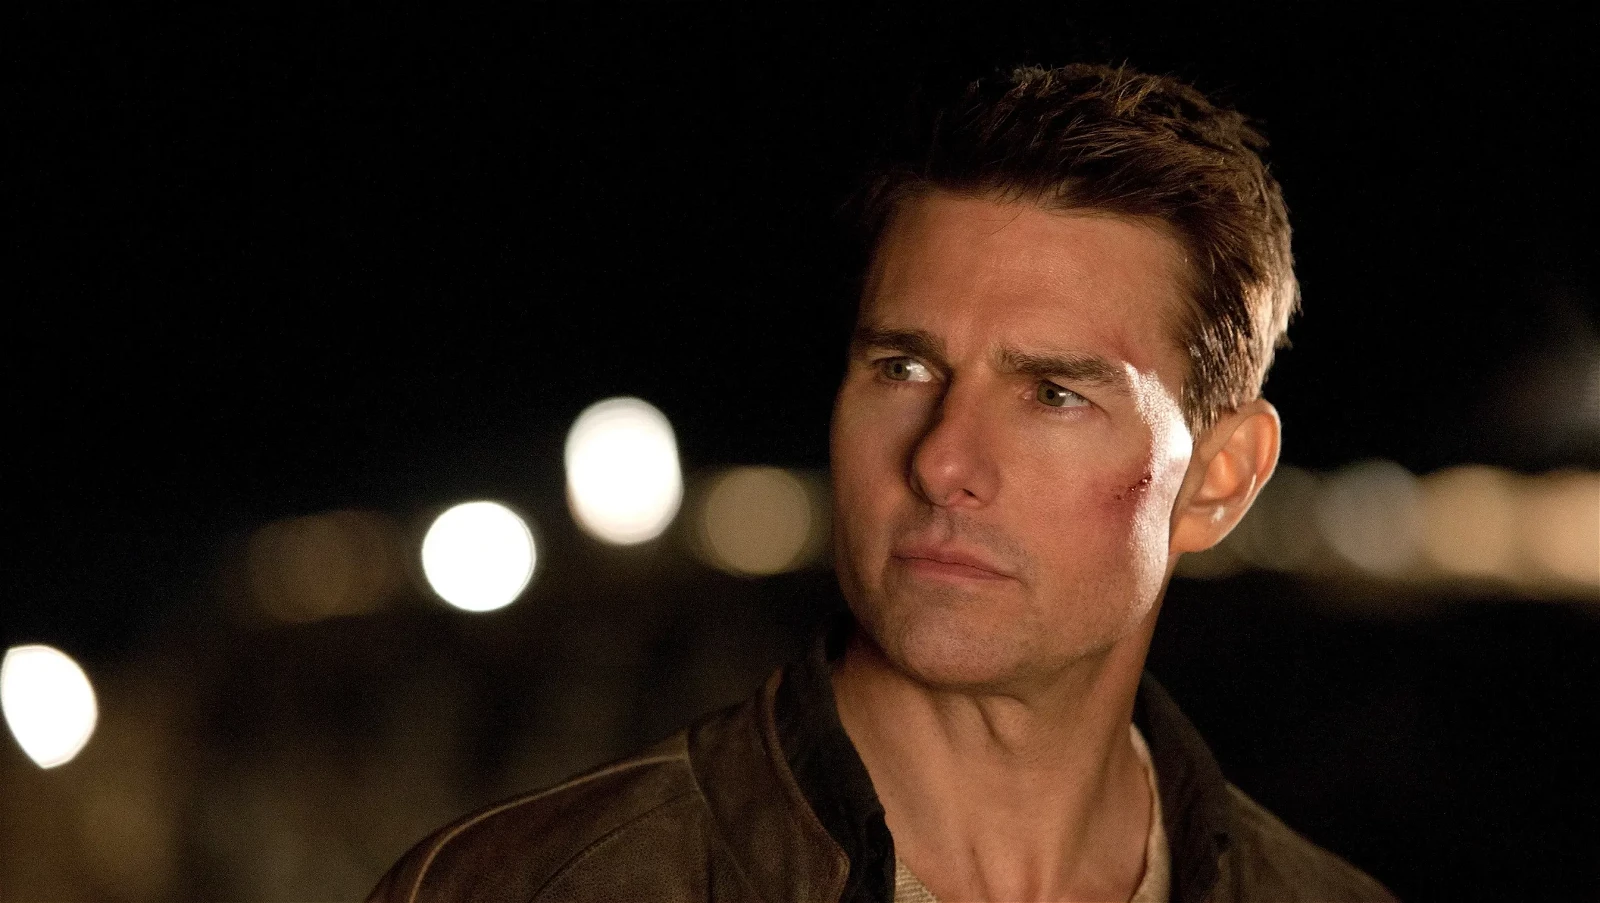 Tom Cruise in Jack Reacher